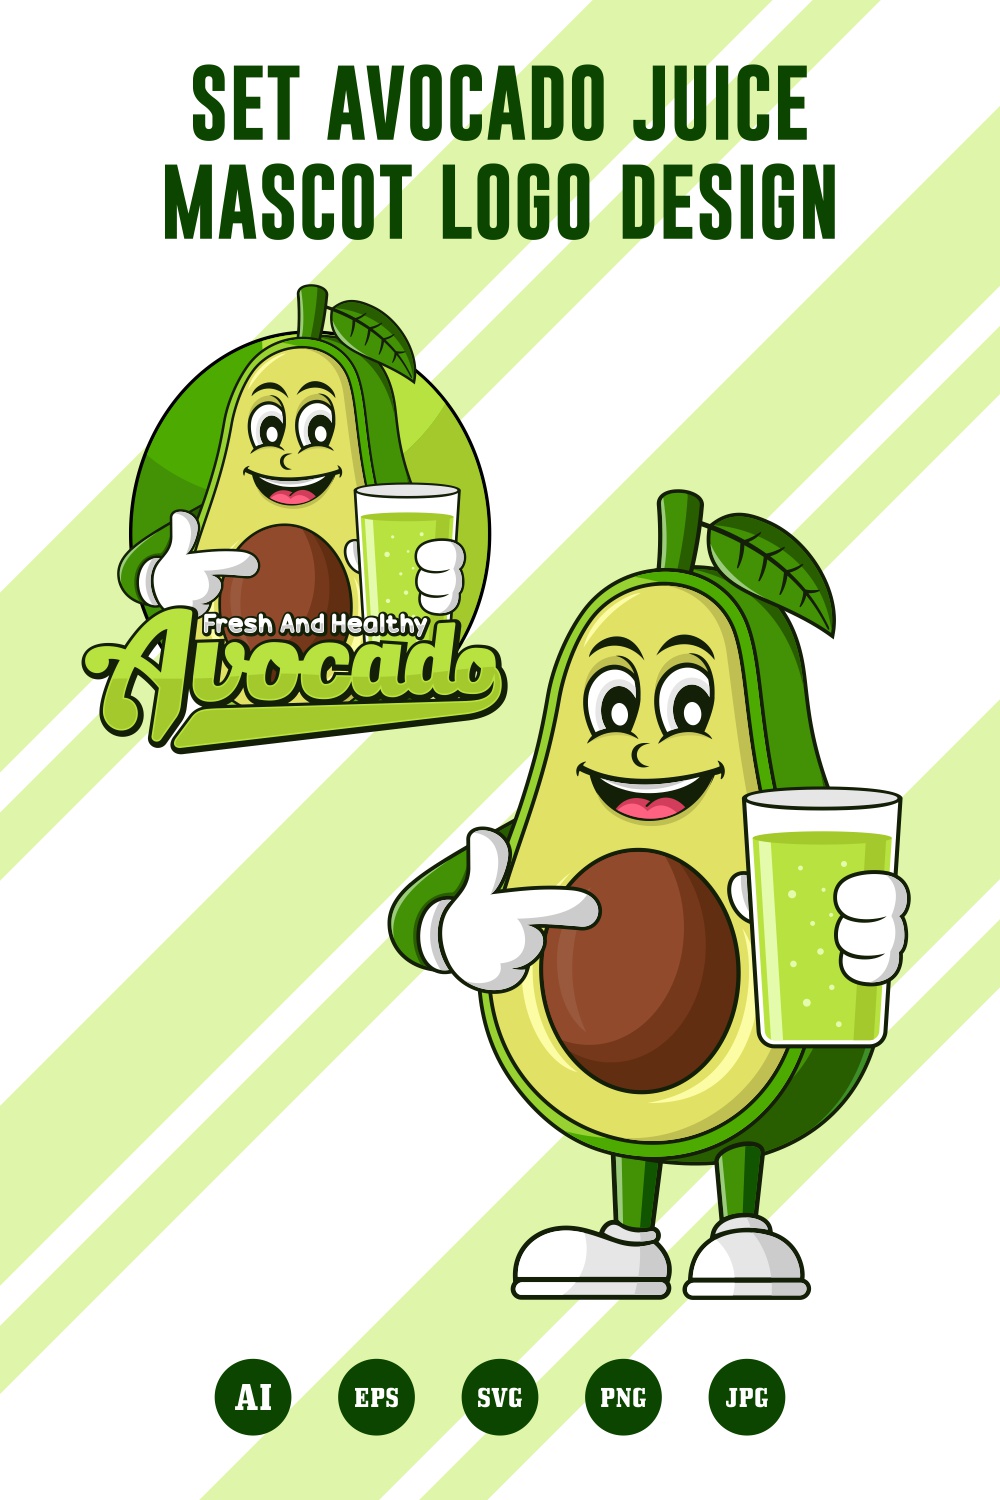 Set Avocado Juice mascot logo design - $6 pinterest preview image.